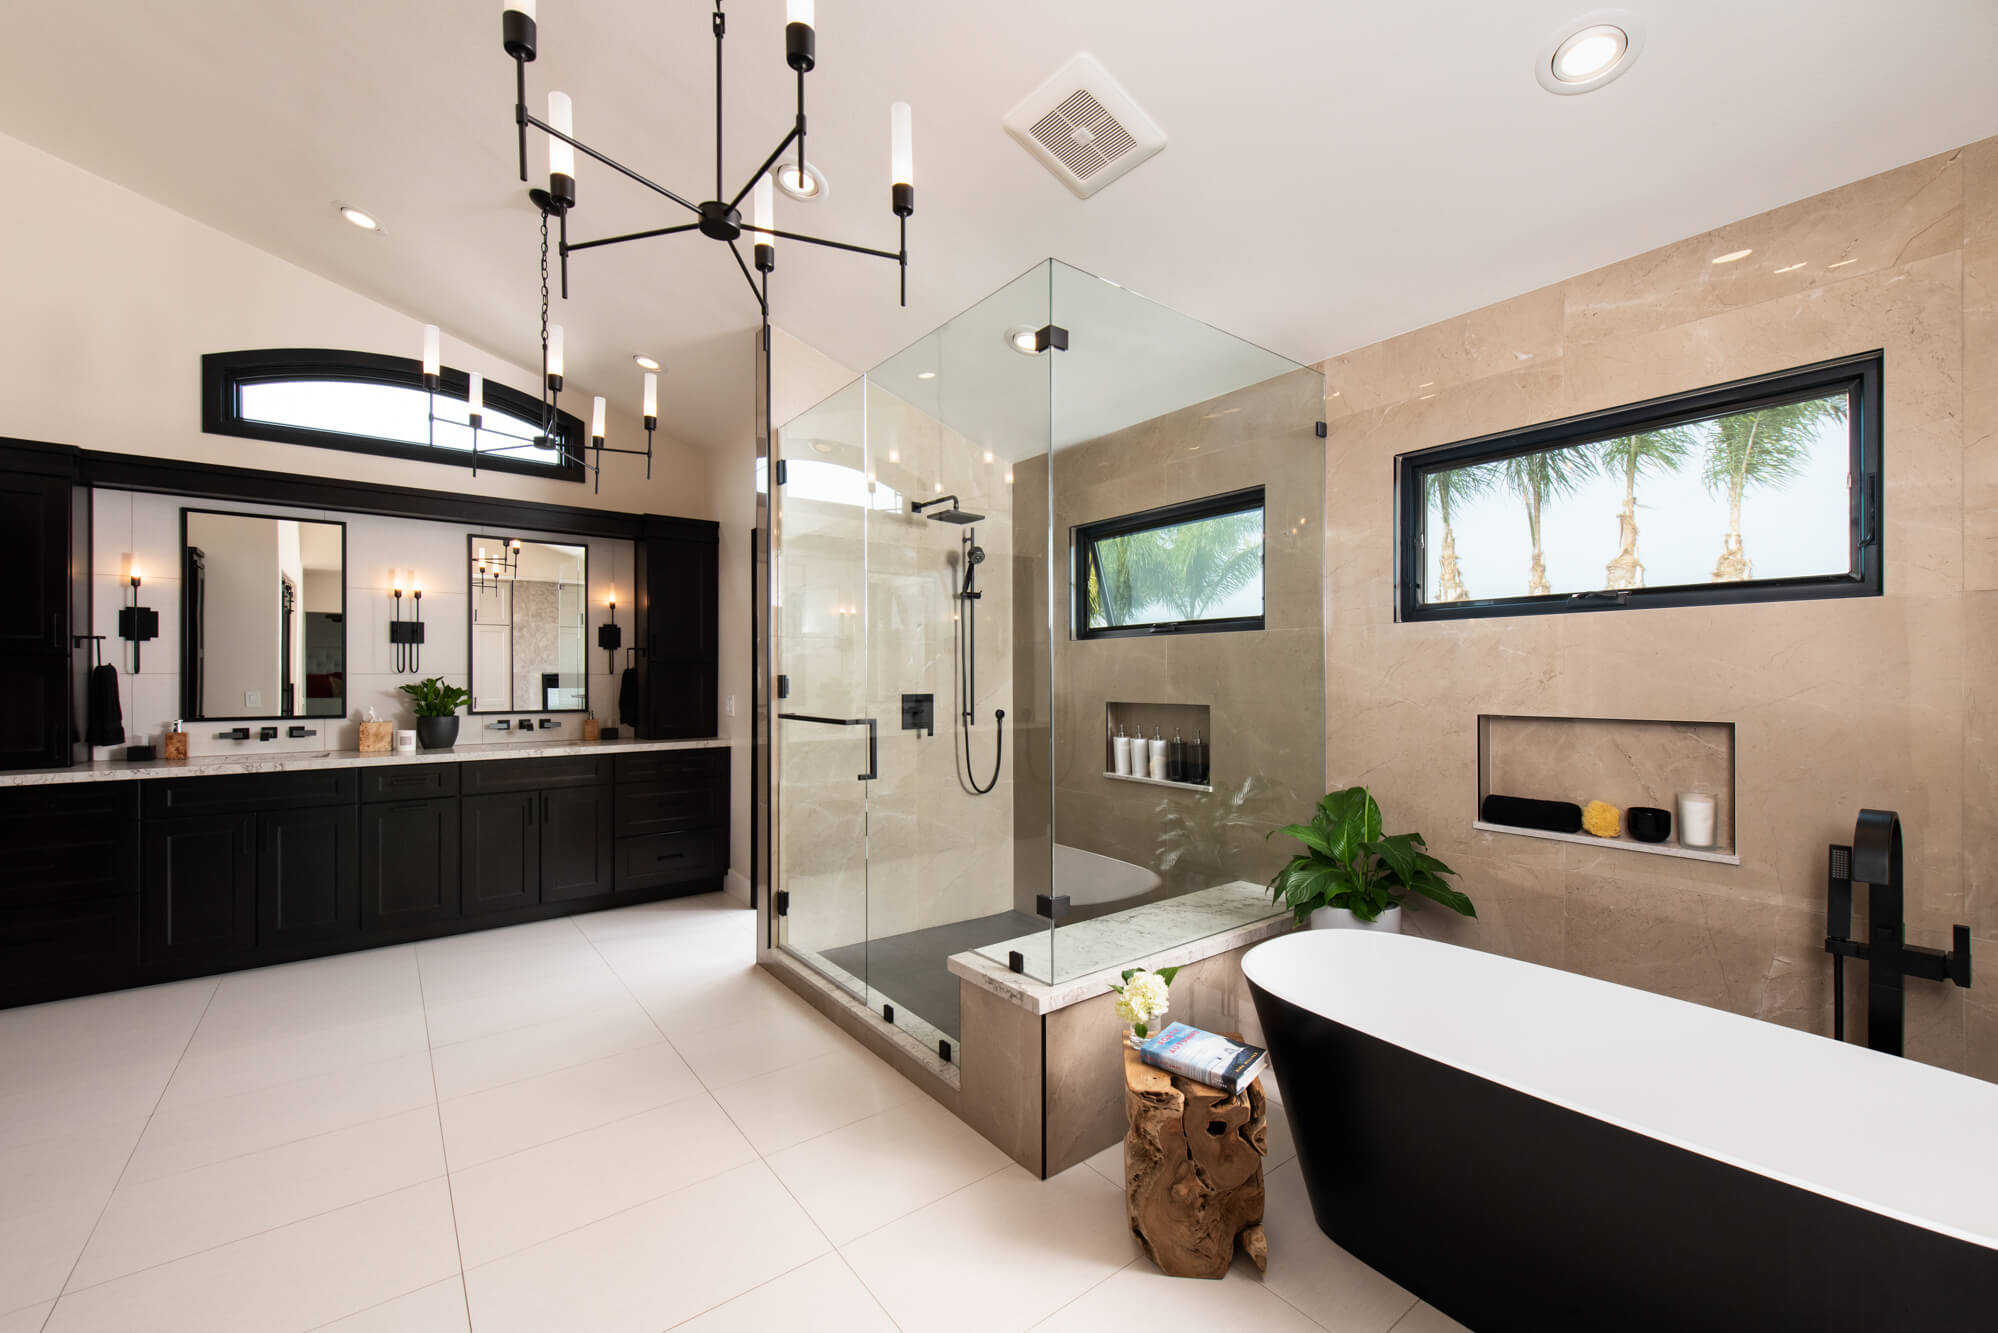 Anaheim Hills master bathroom remodel - spa-like bathroom